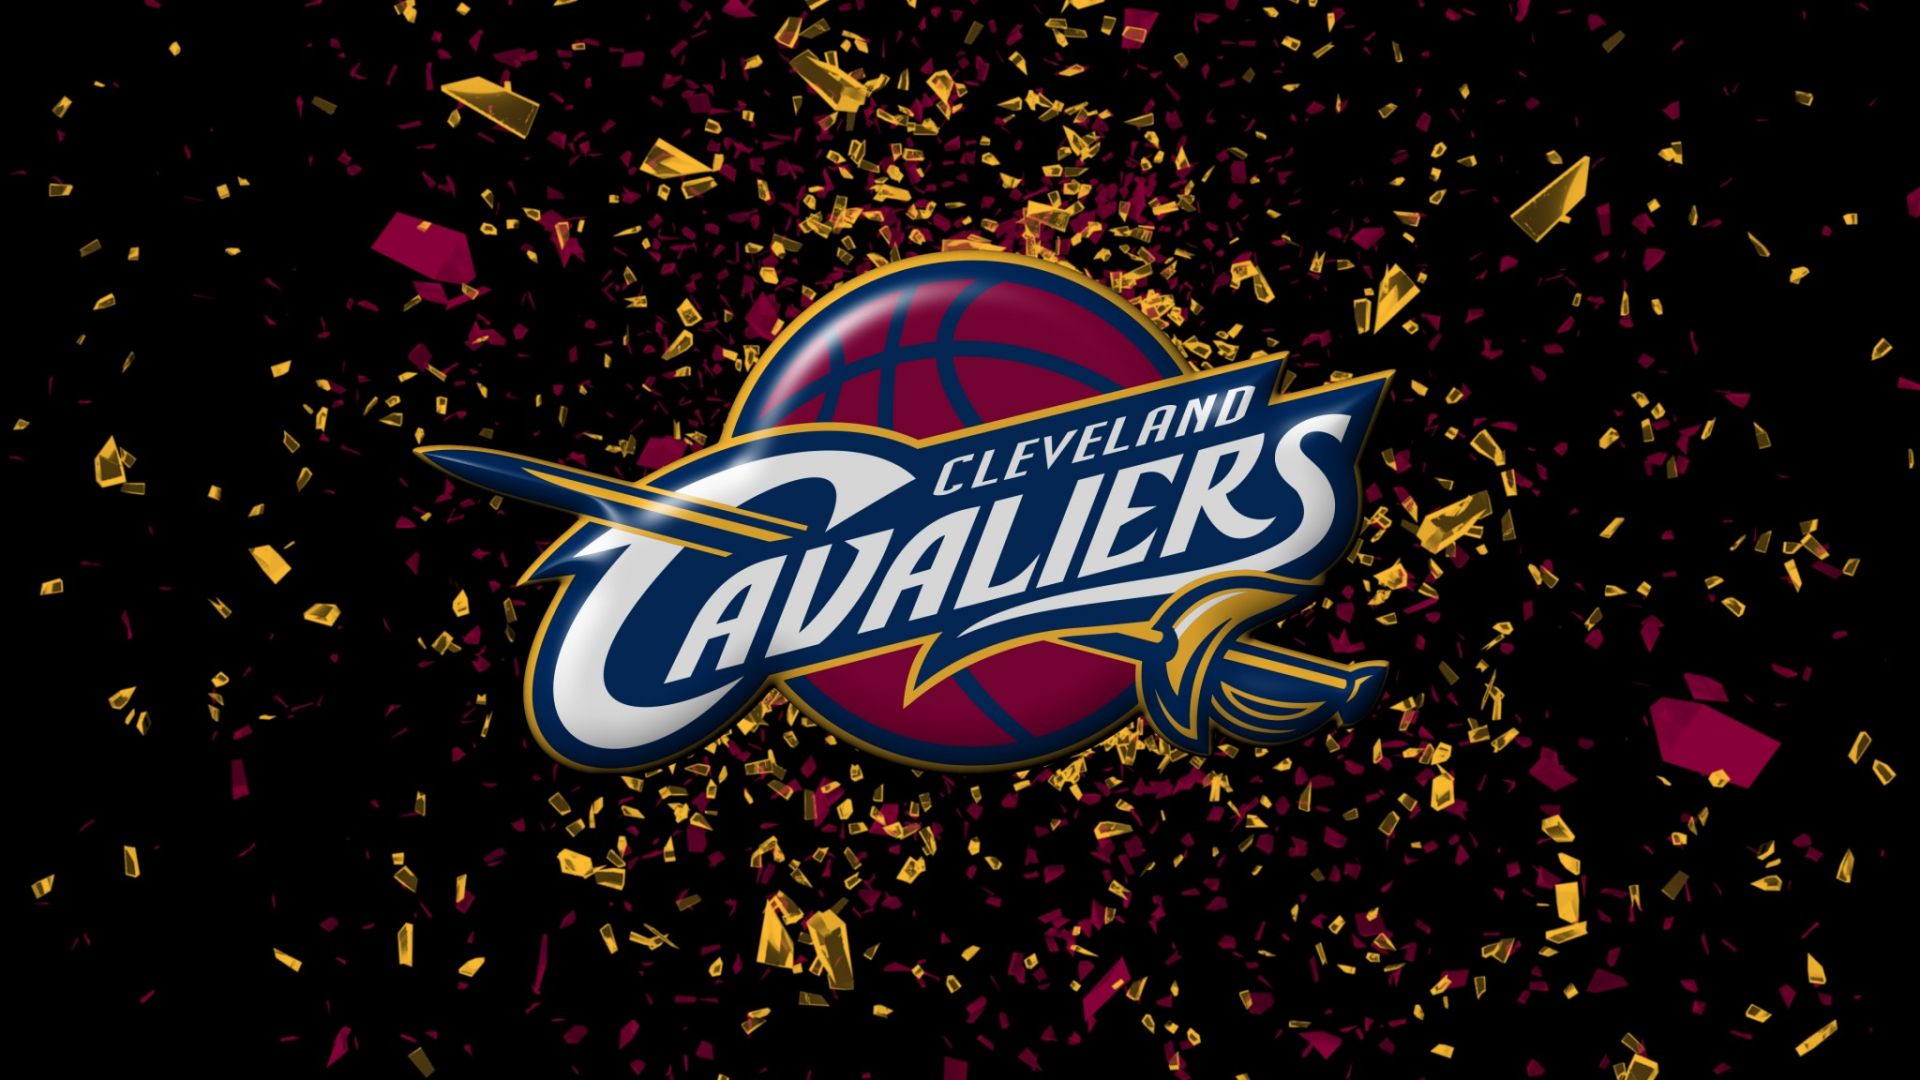 Wallpaper Beautiful cleveland cavaliers basketball team logo